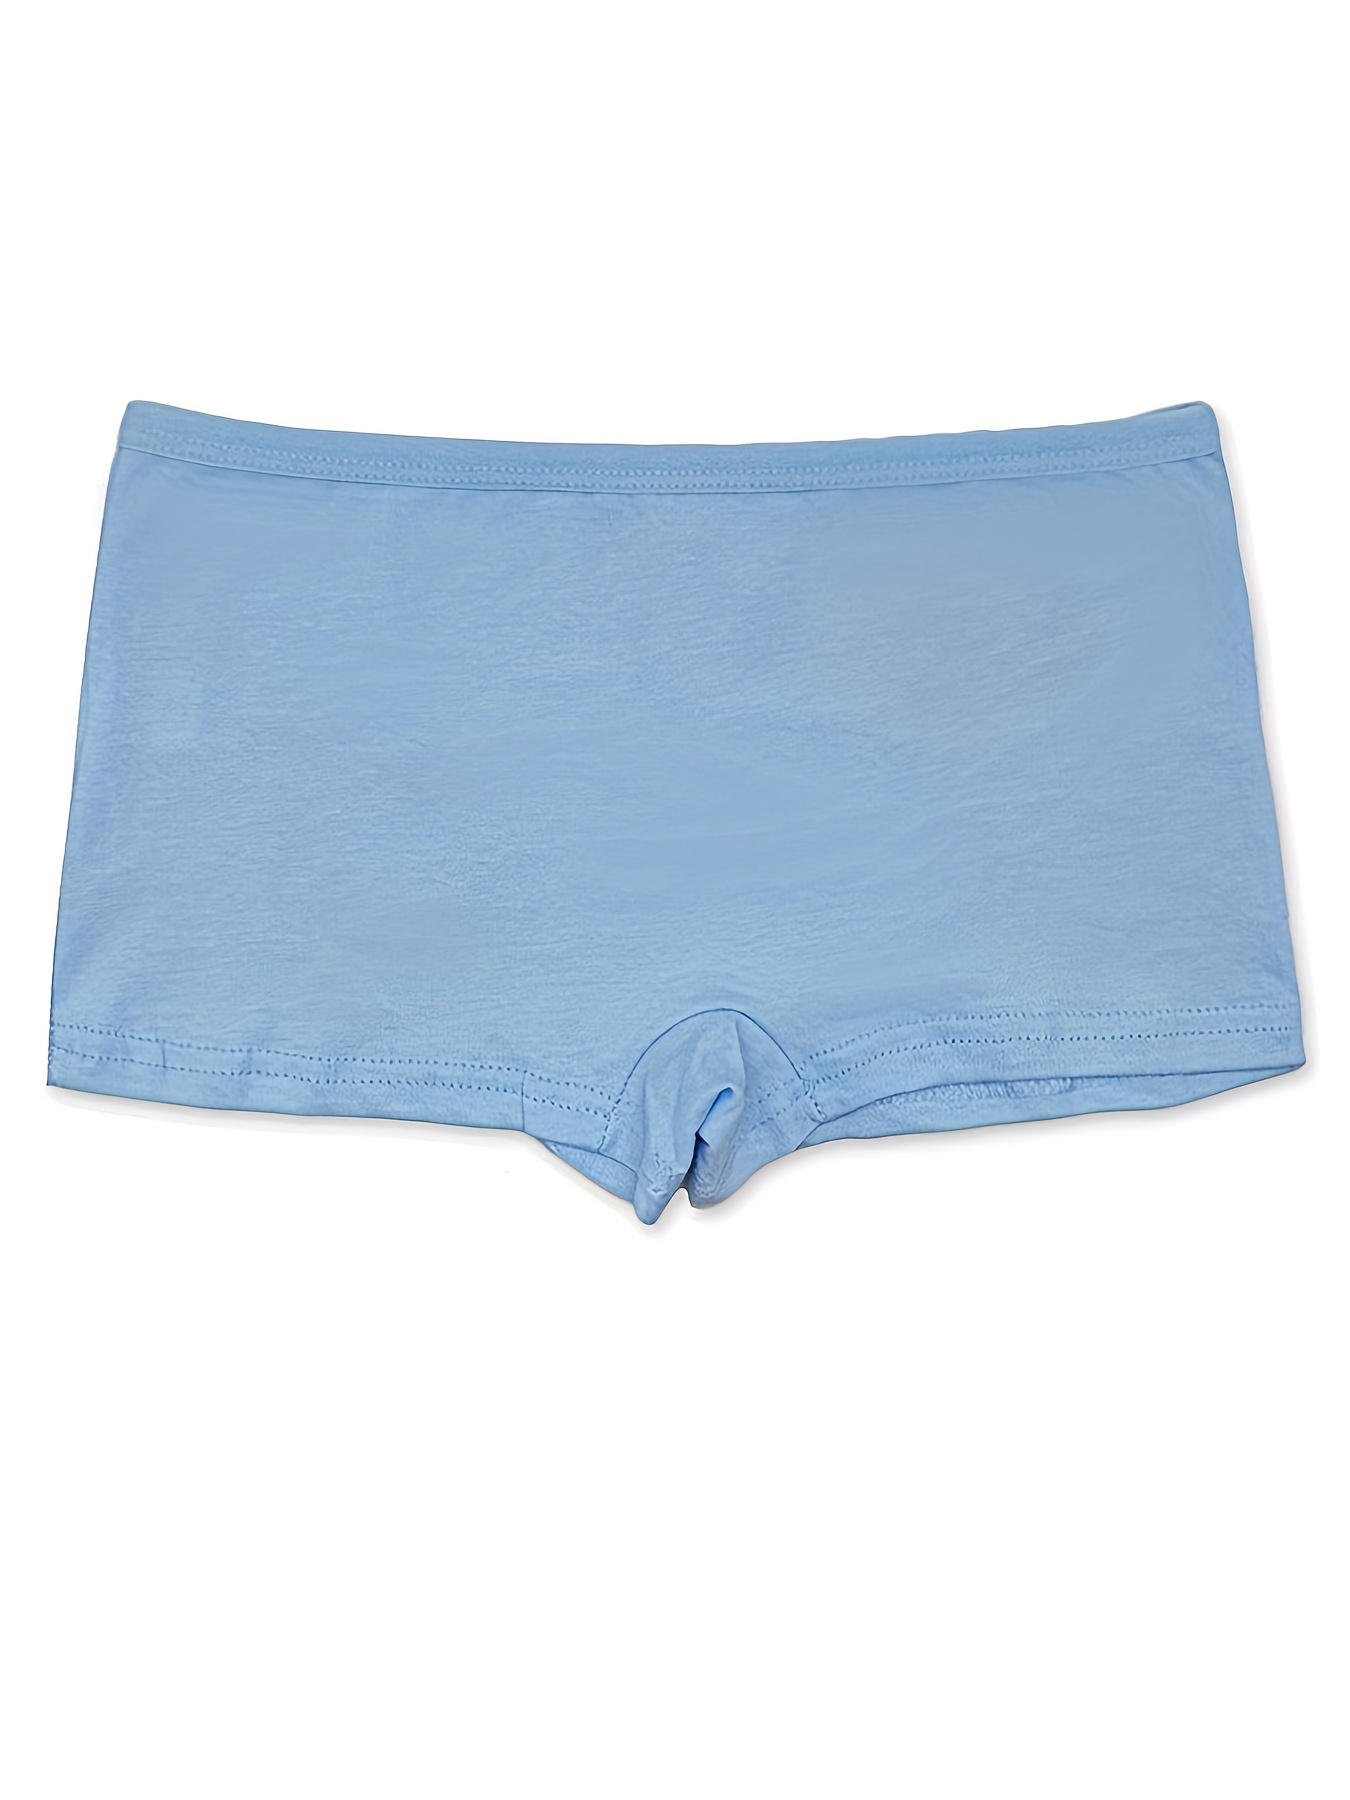 Men's Briefs Colorful Kids Meal Men's Underwear Triangle Print Breathable  Briefs